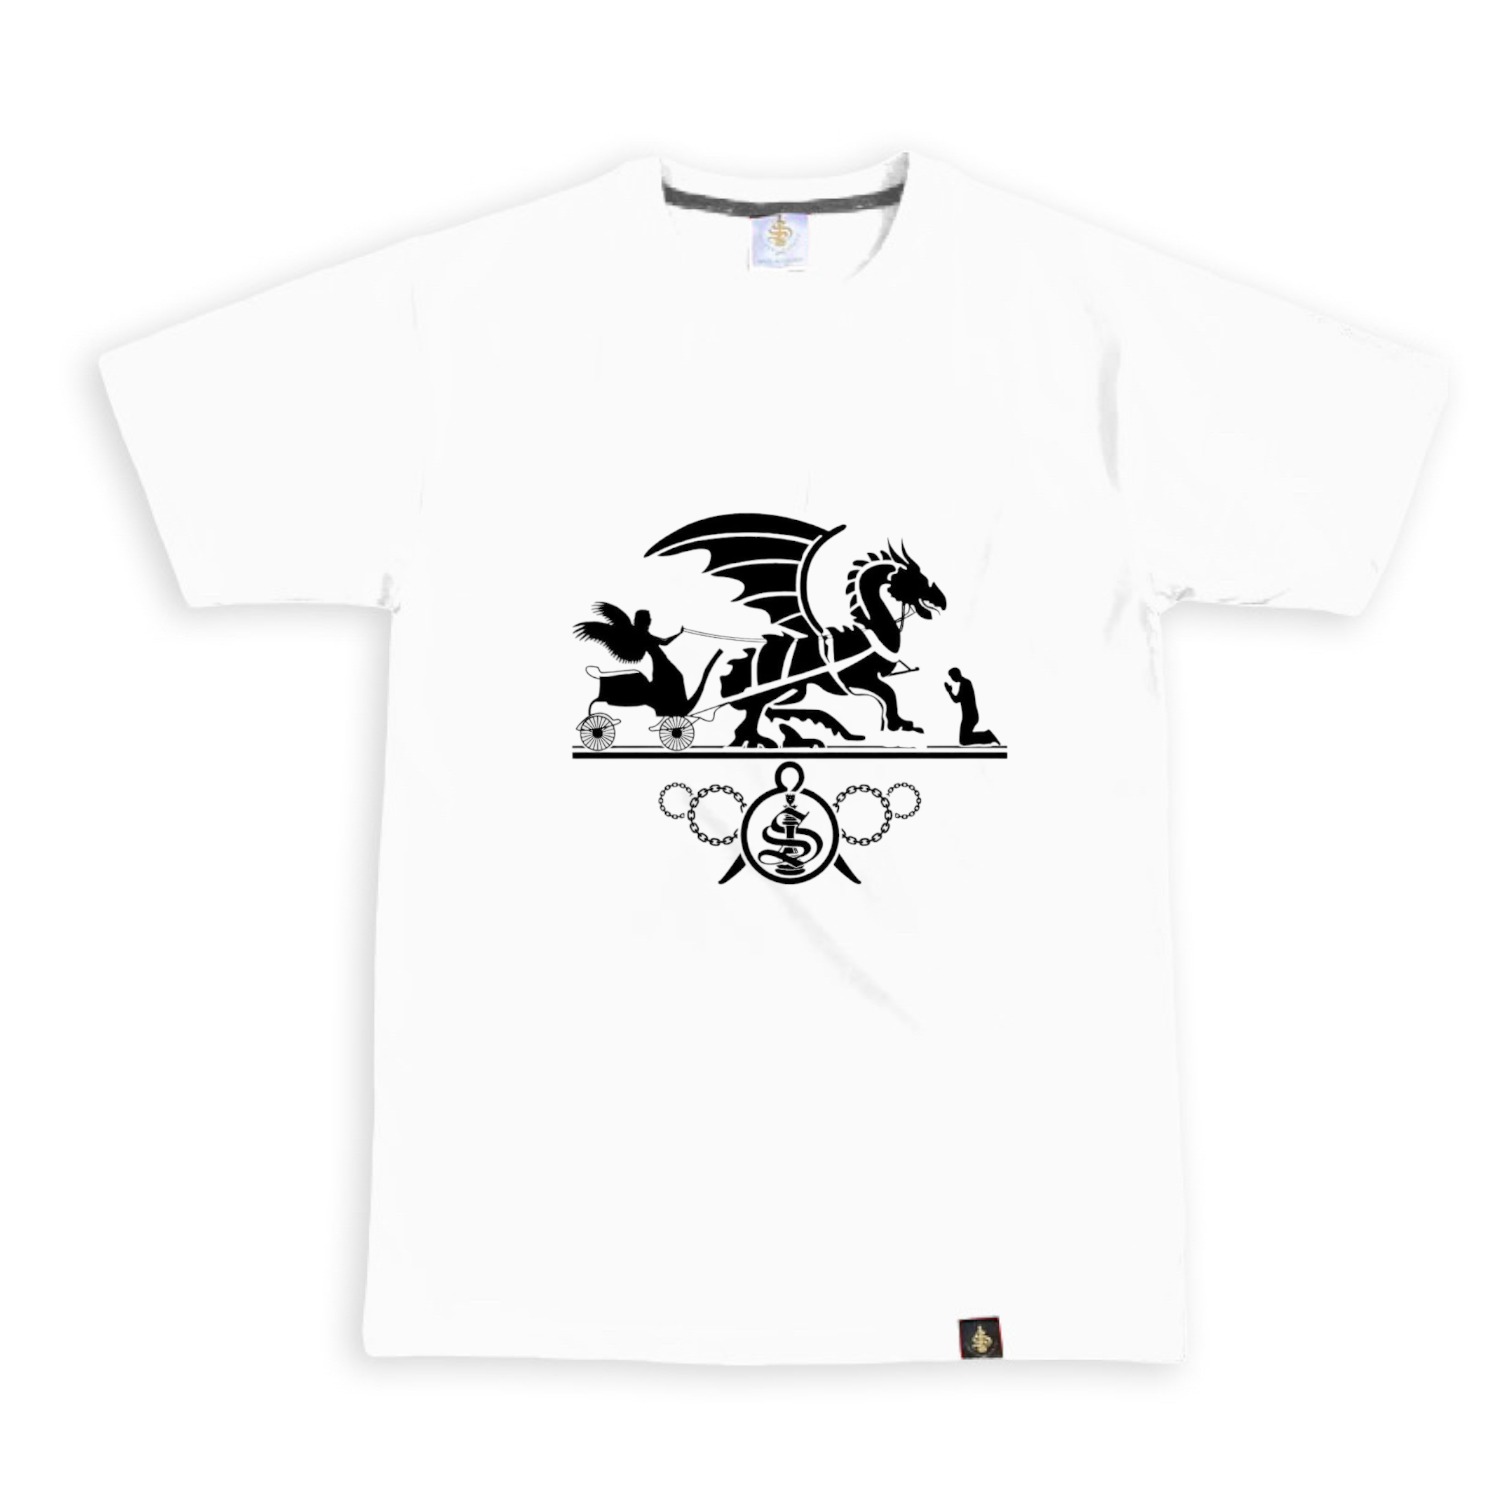 Chariot T-shirt - Sinners2Saints